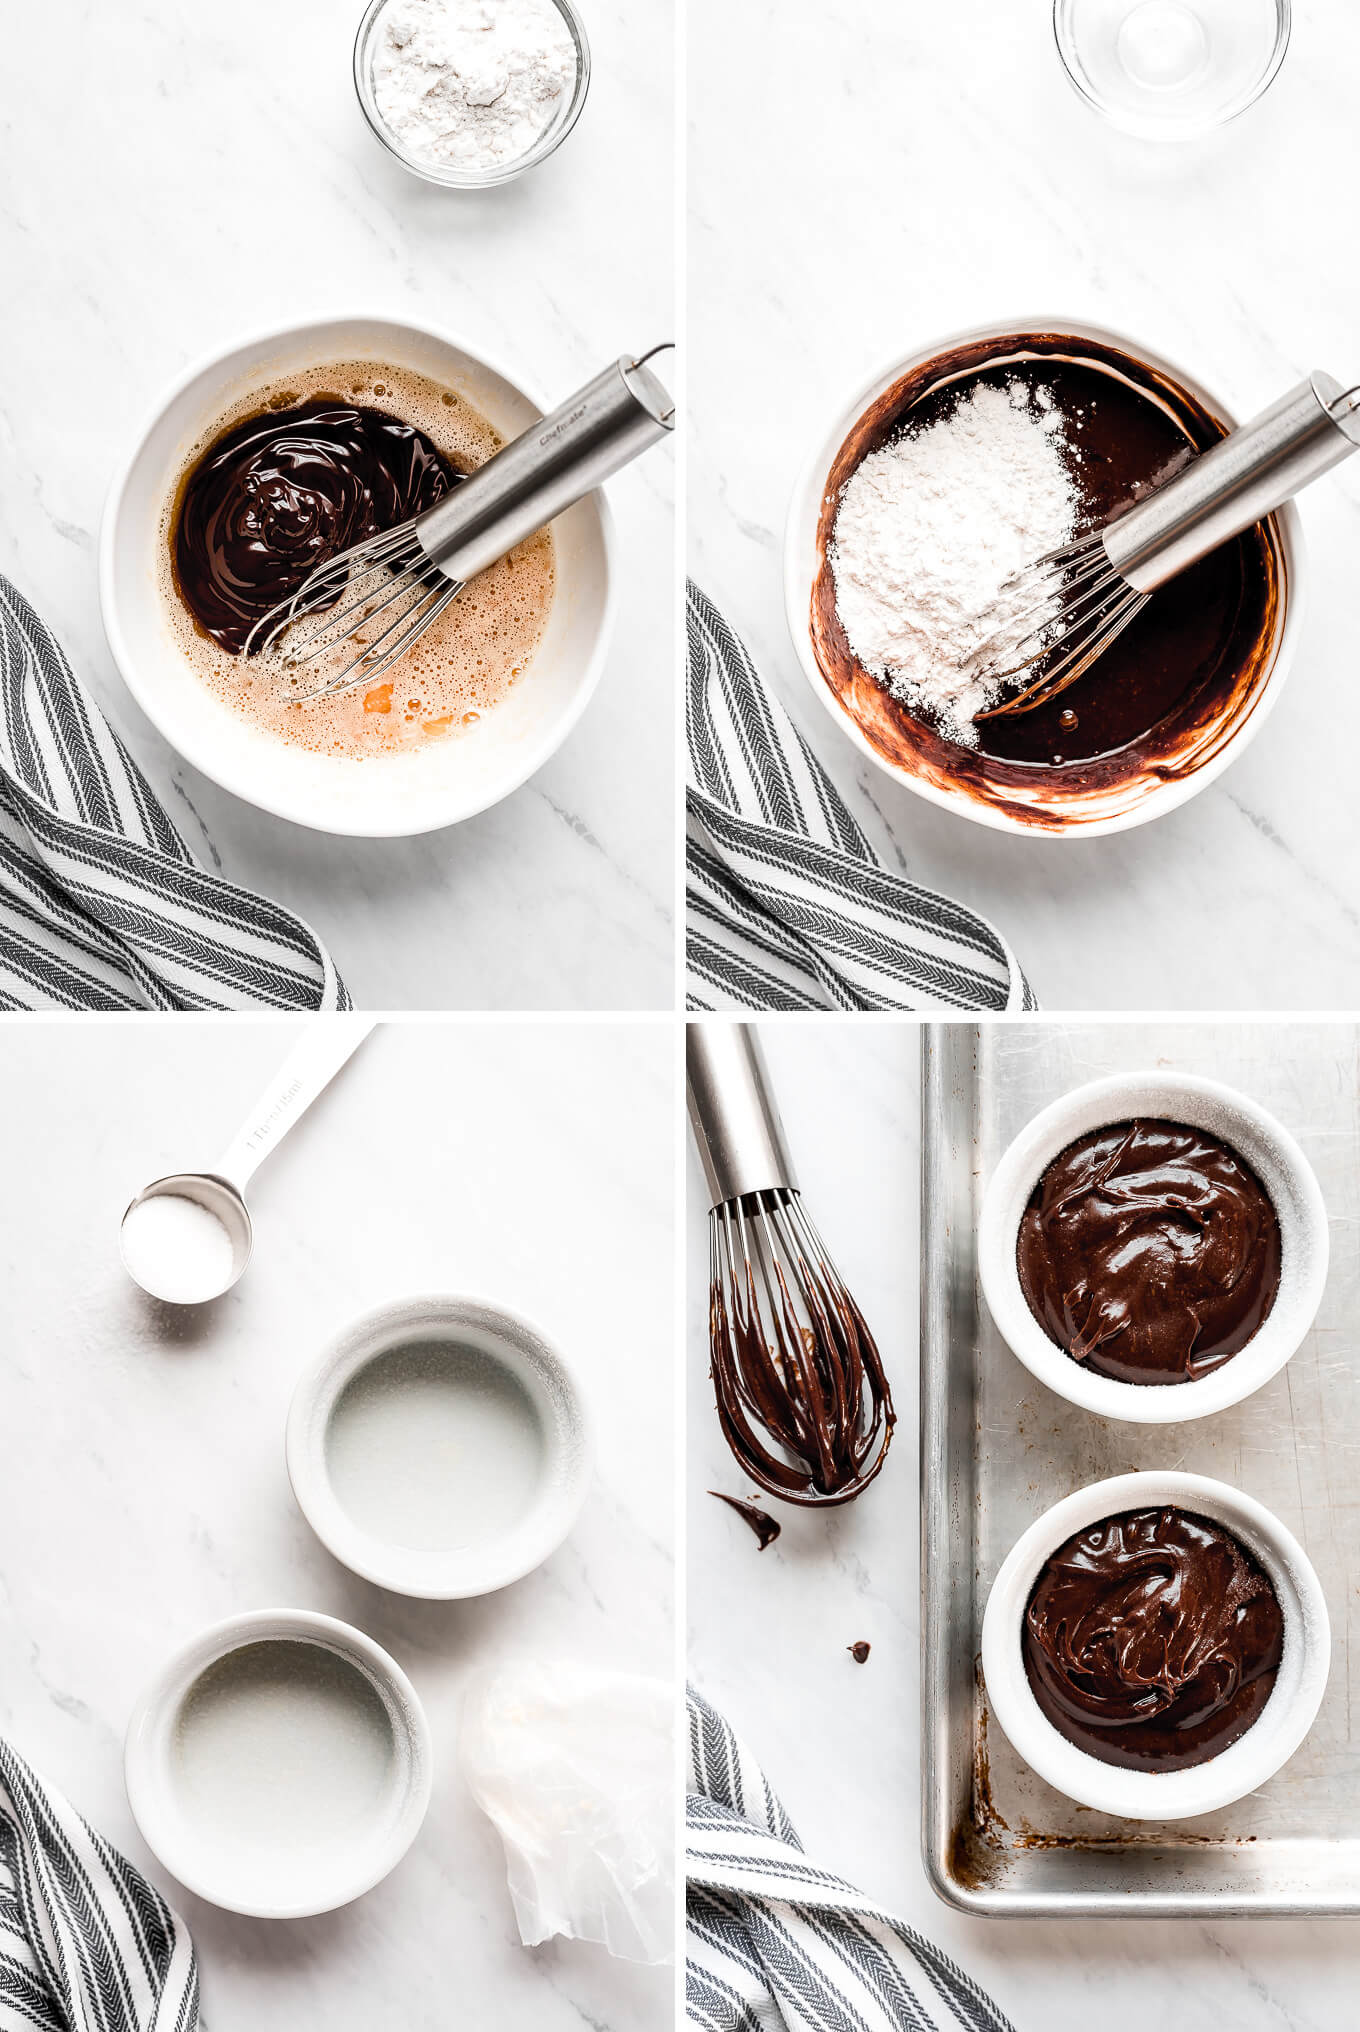 Process shots of making mini chocolate cakes.